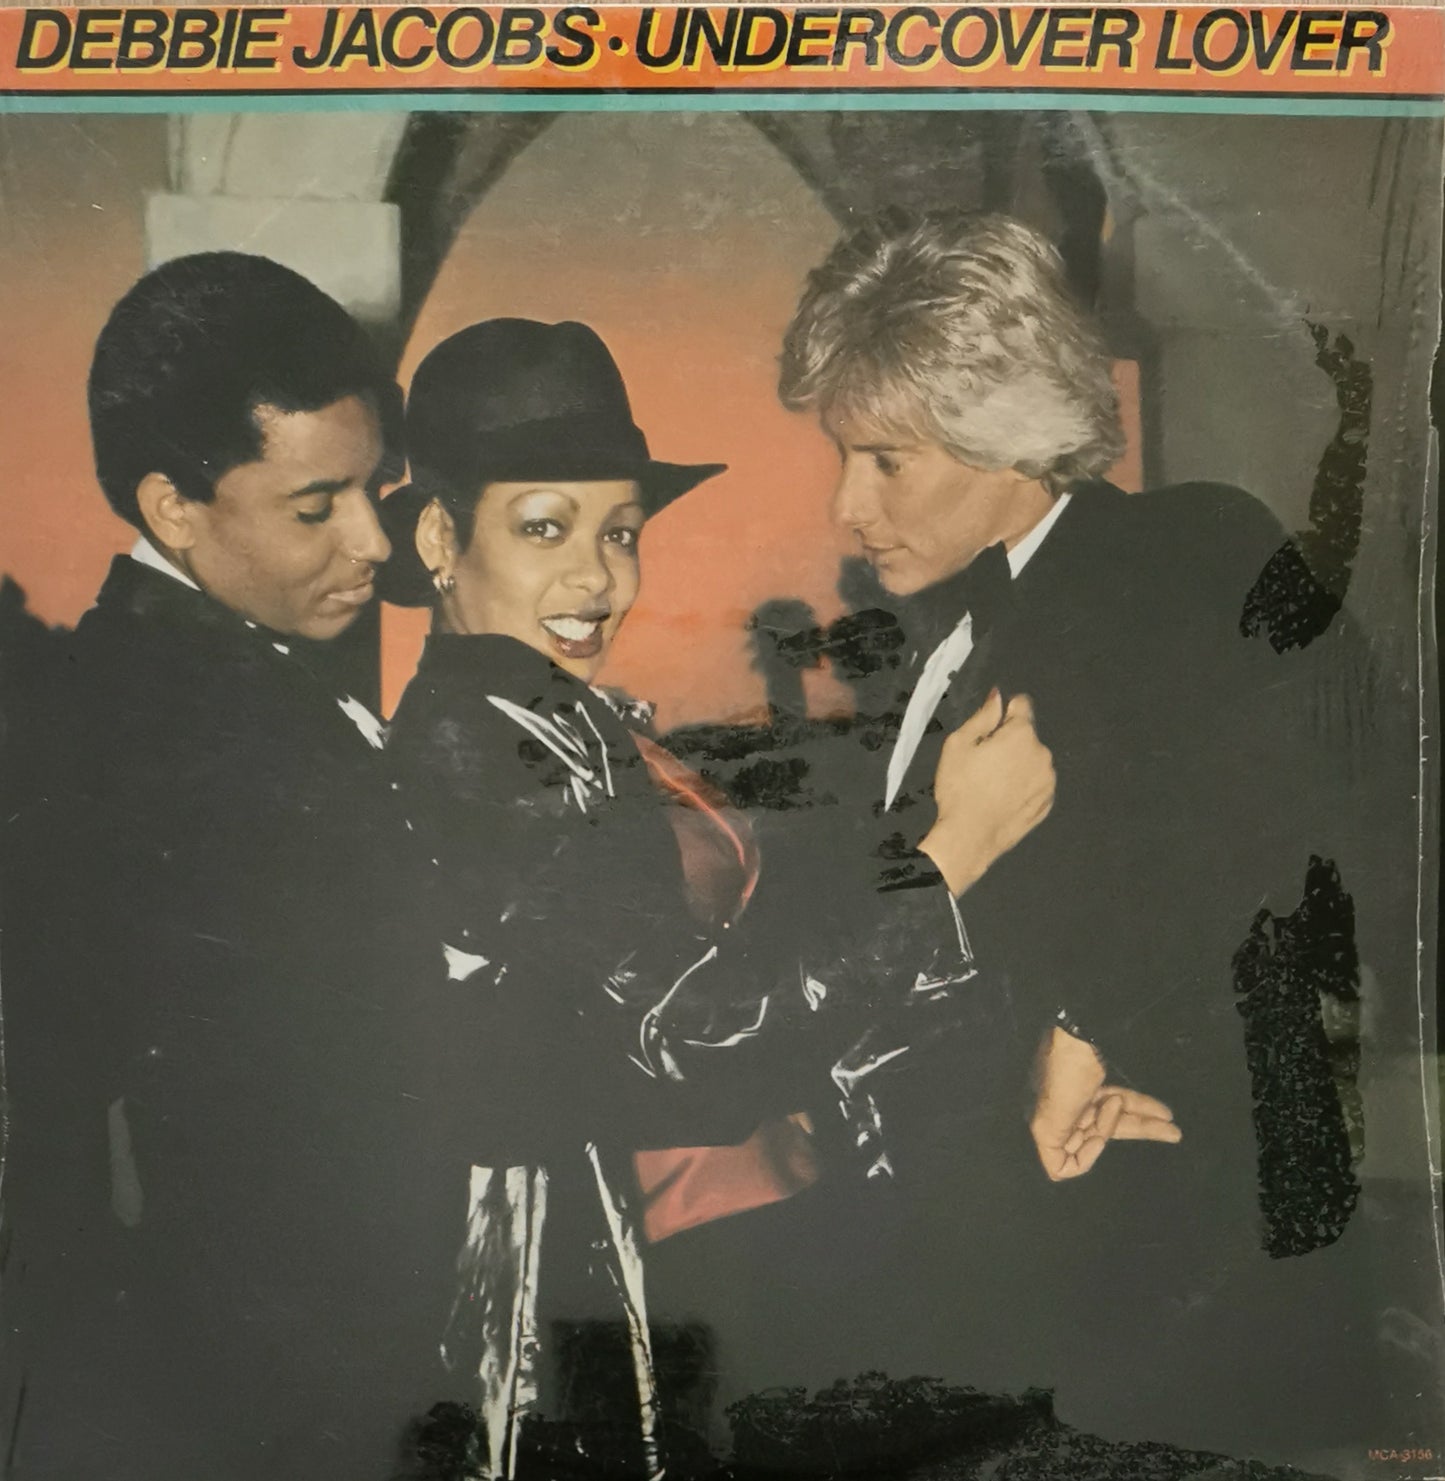 DEBBIE JACOBS - Undercover Lover